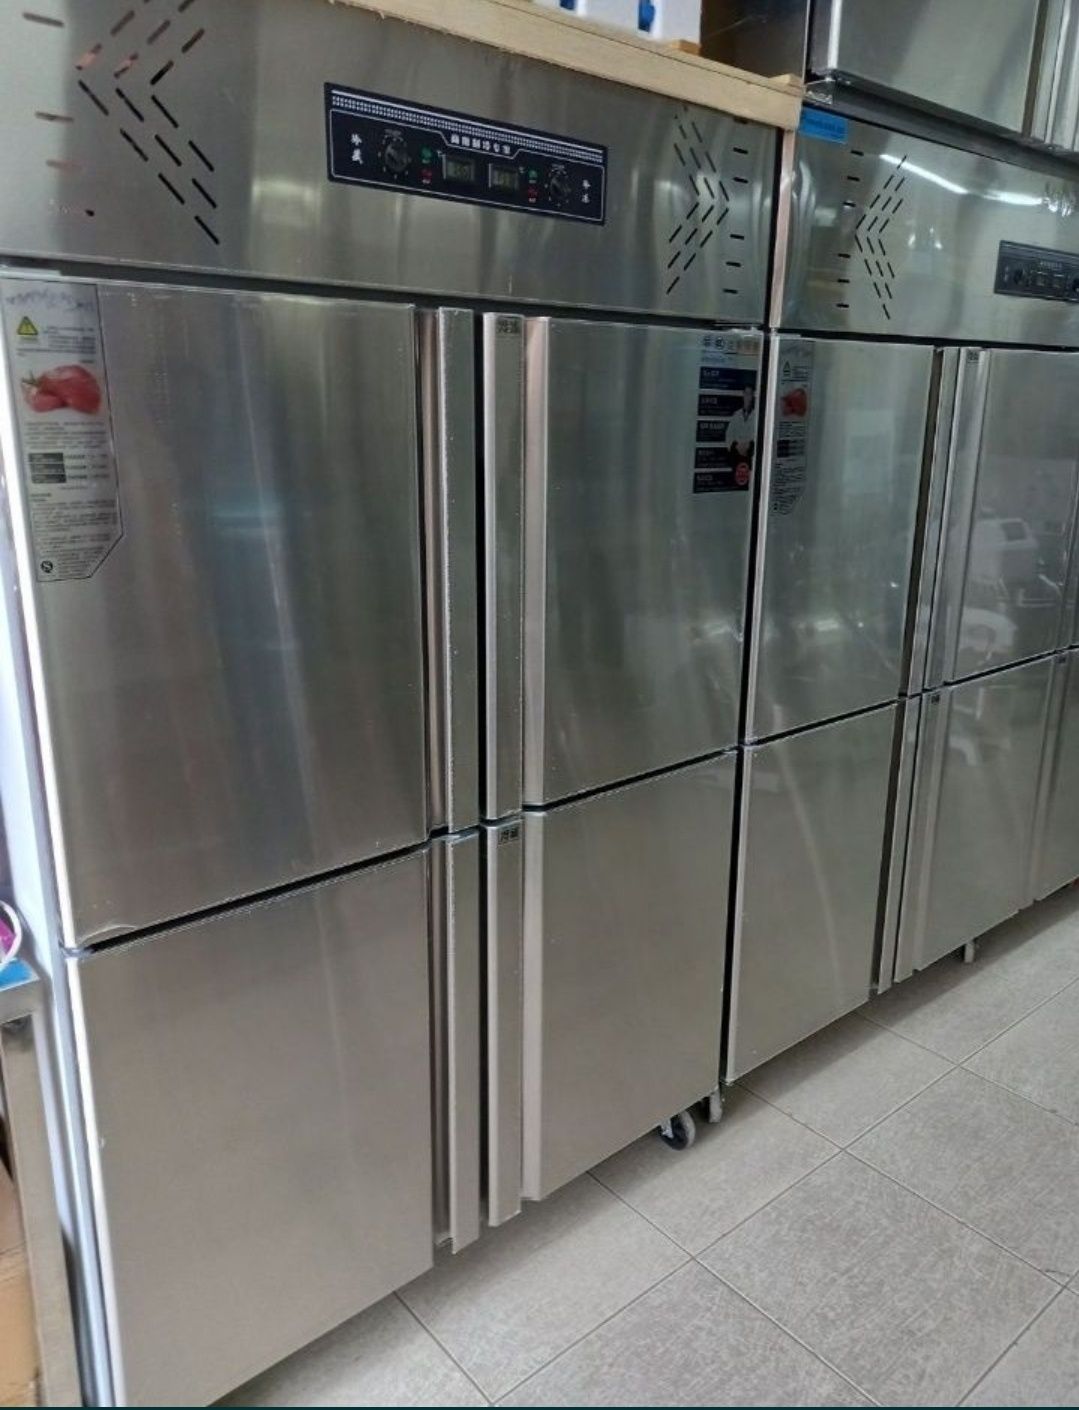 Промышленный холодильник, Xolodilnik, xaladinnik shikaf 1 qul
Muzlatgi